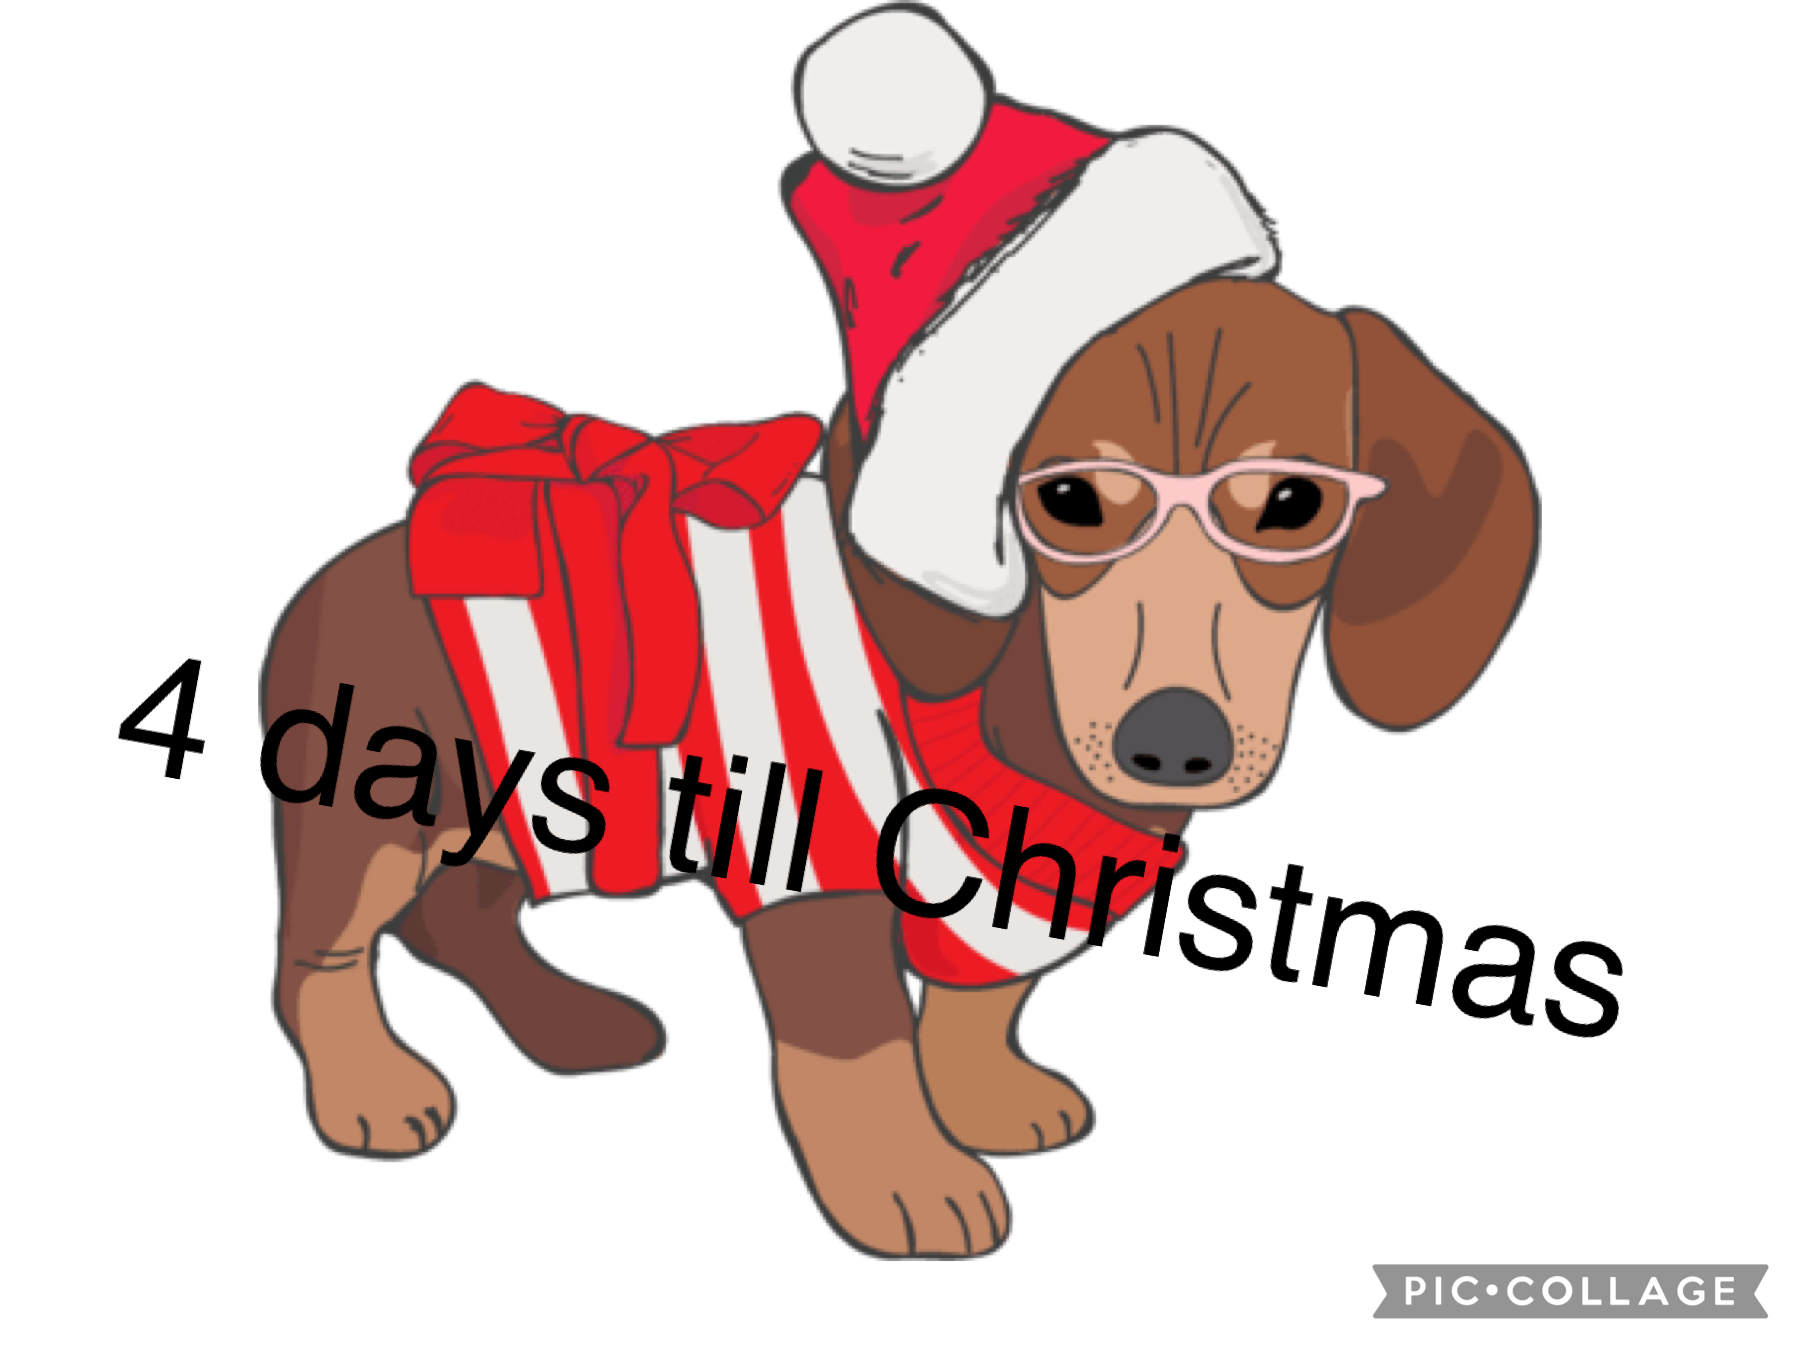 4 days till Christmas 